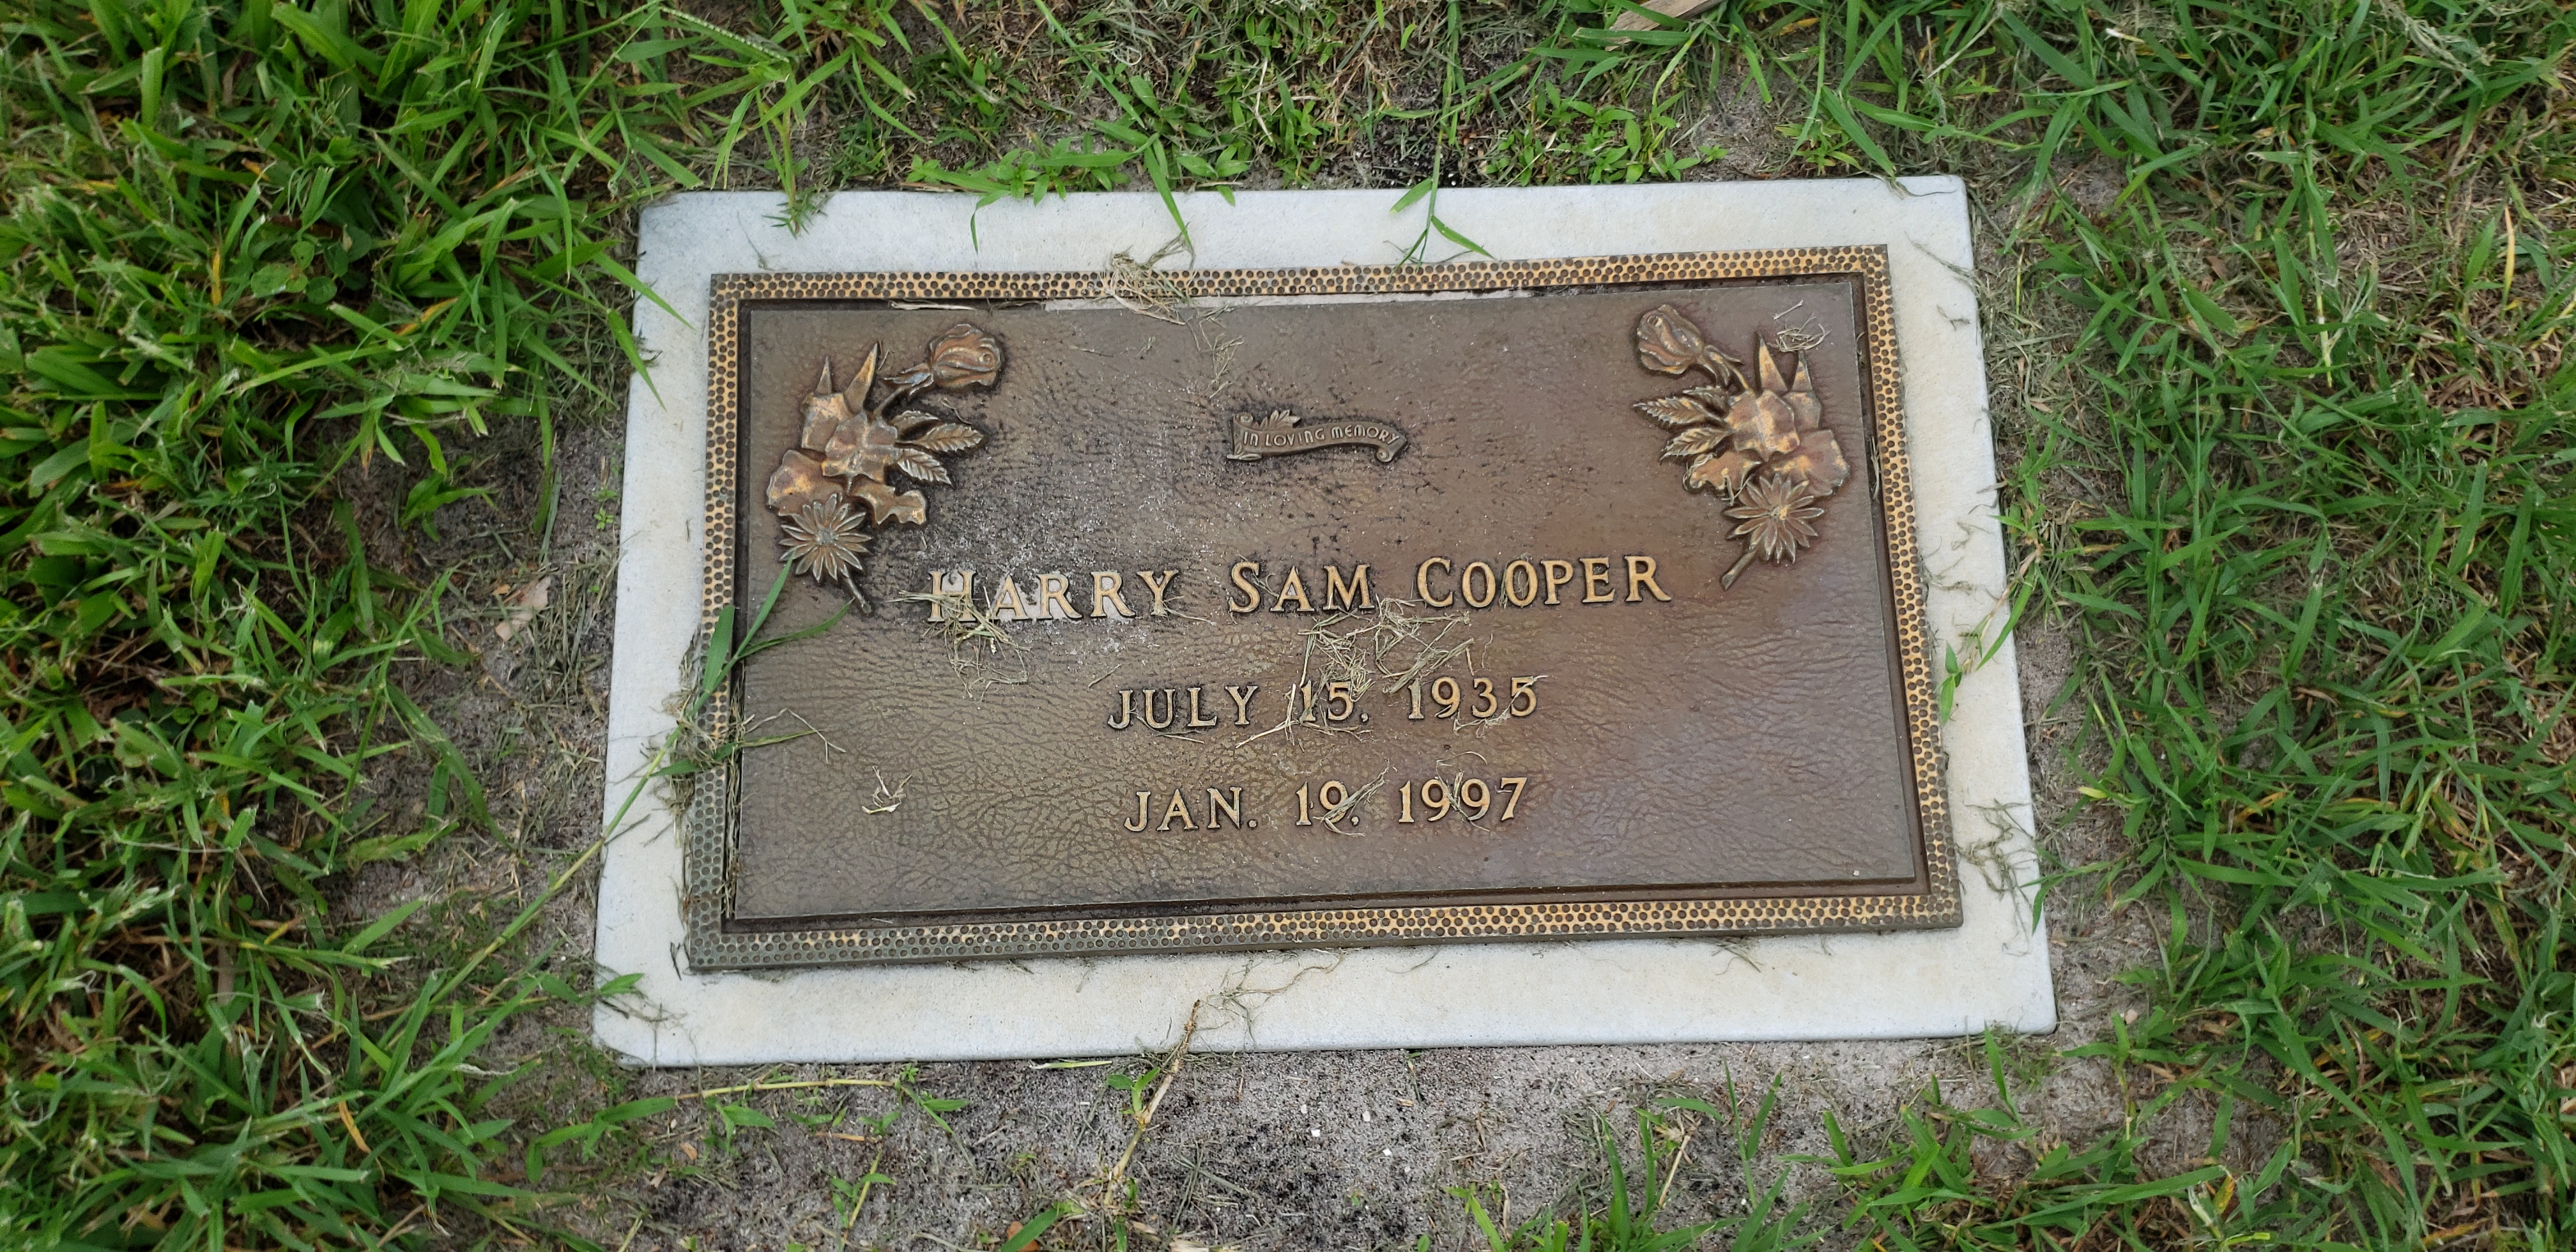 Harry Sam Cooper